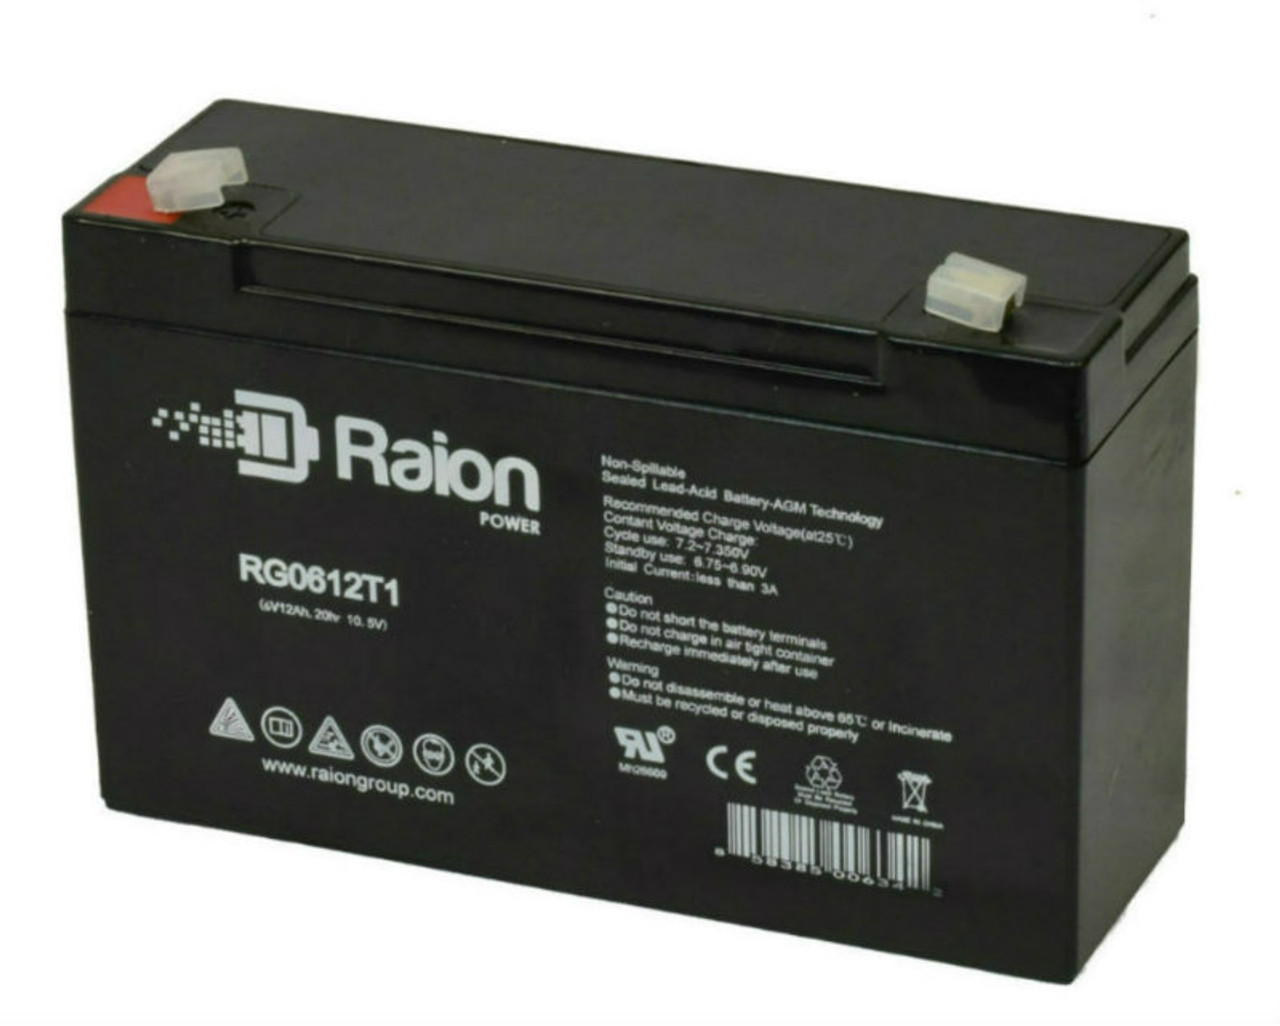 Raion Power RG06120T1 Replacement Emergency Light Battery for Sonnenschein 7895523